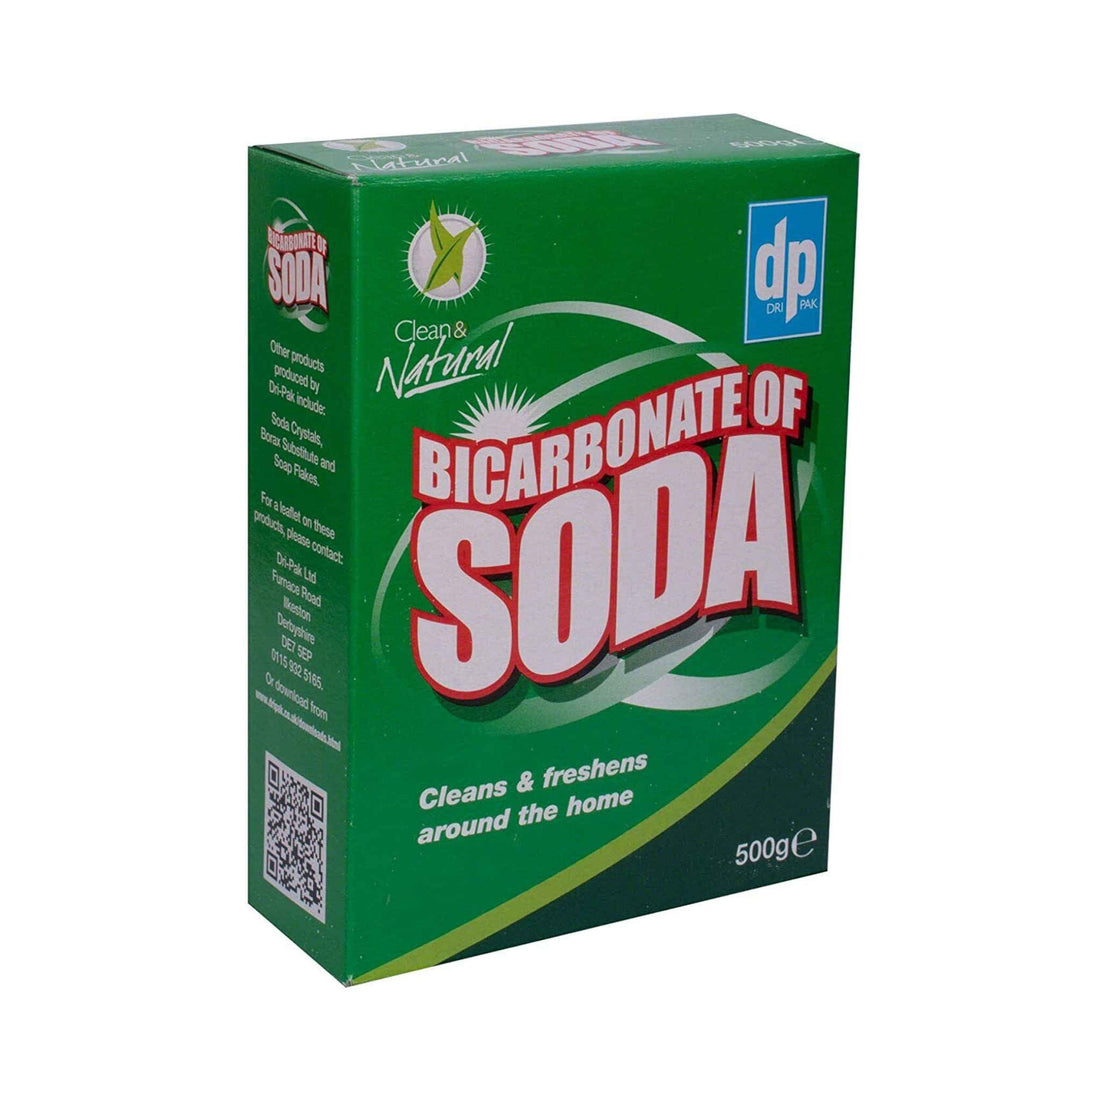 Dri Pak Bicarbonate Soda | 500g